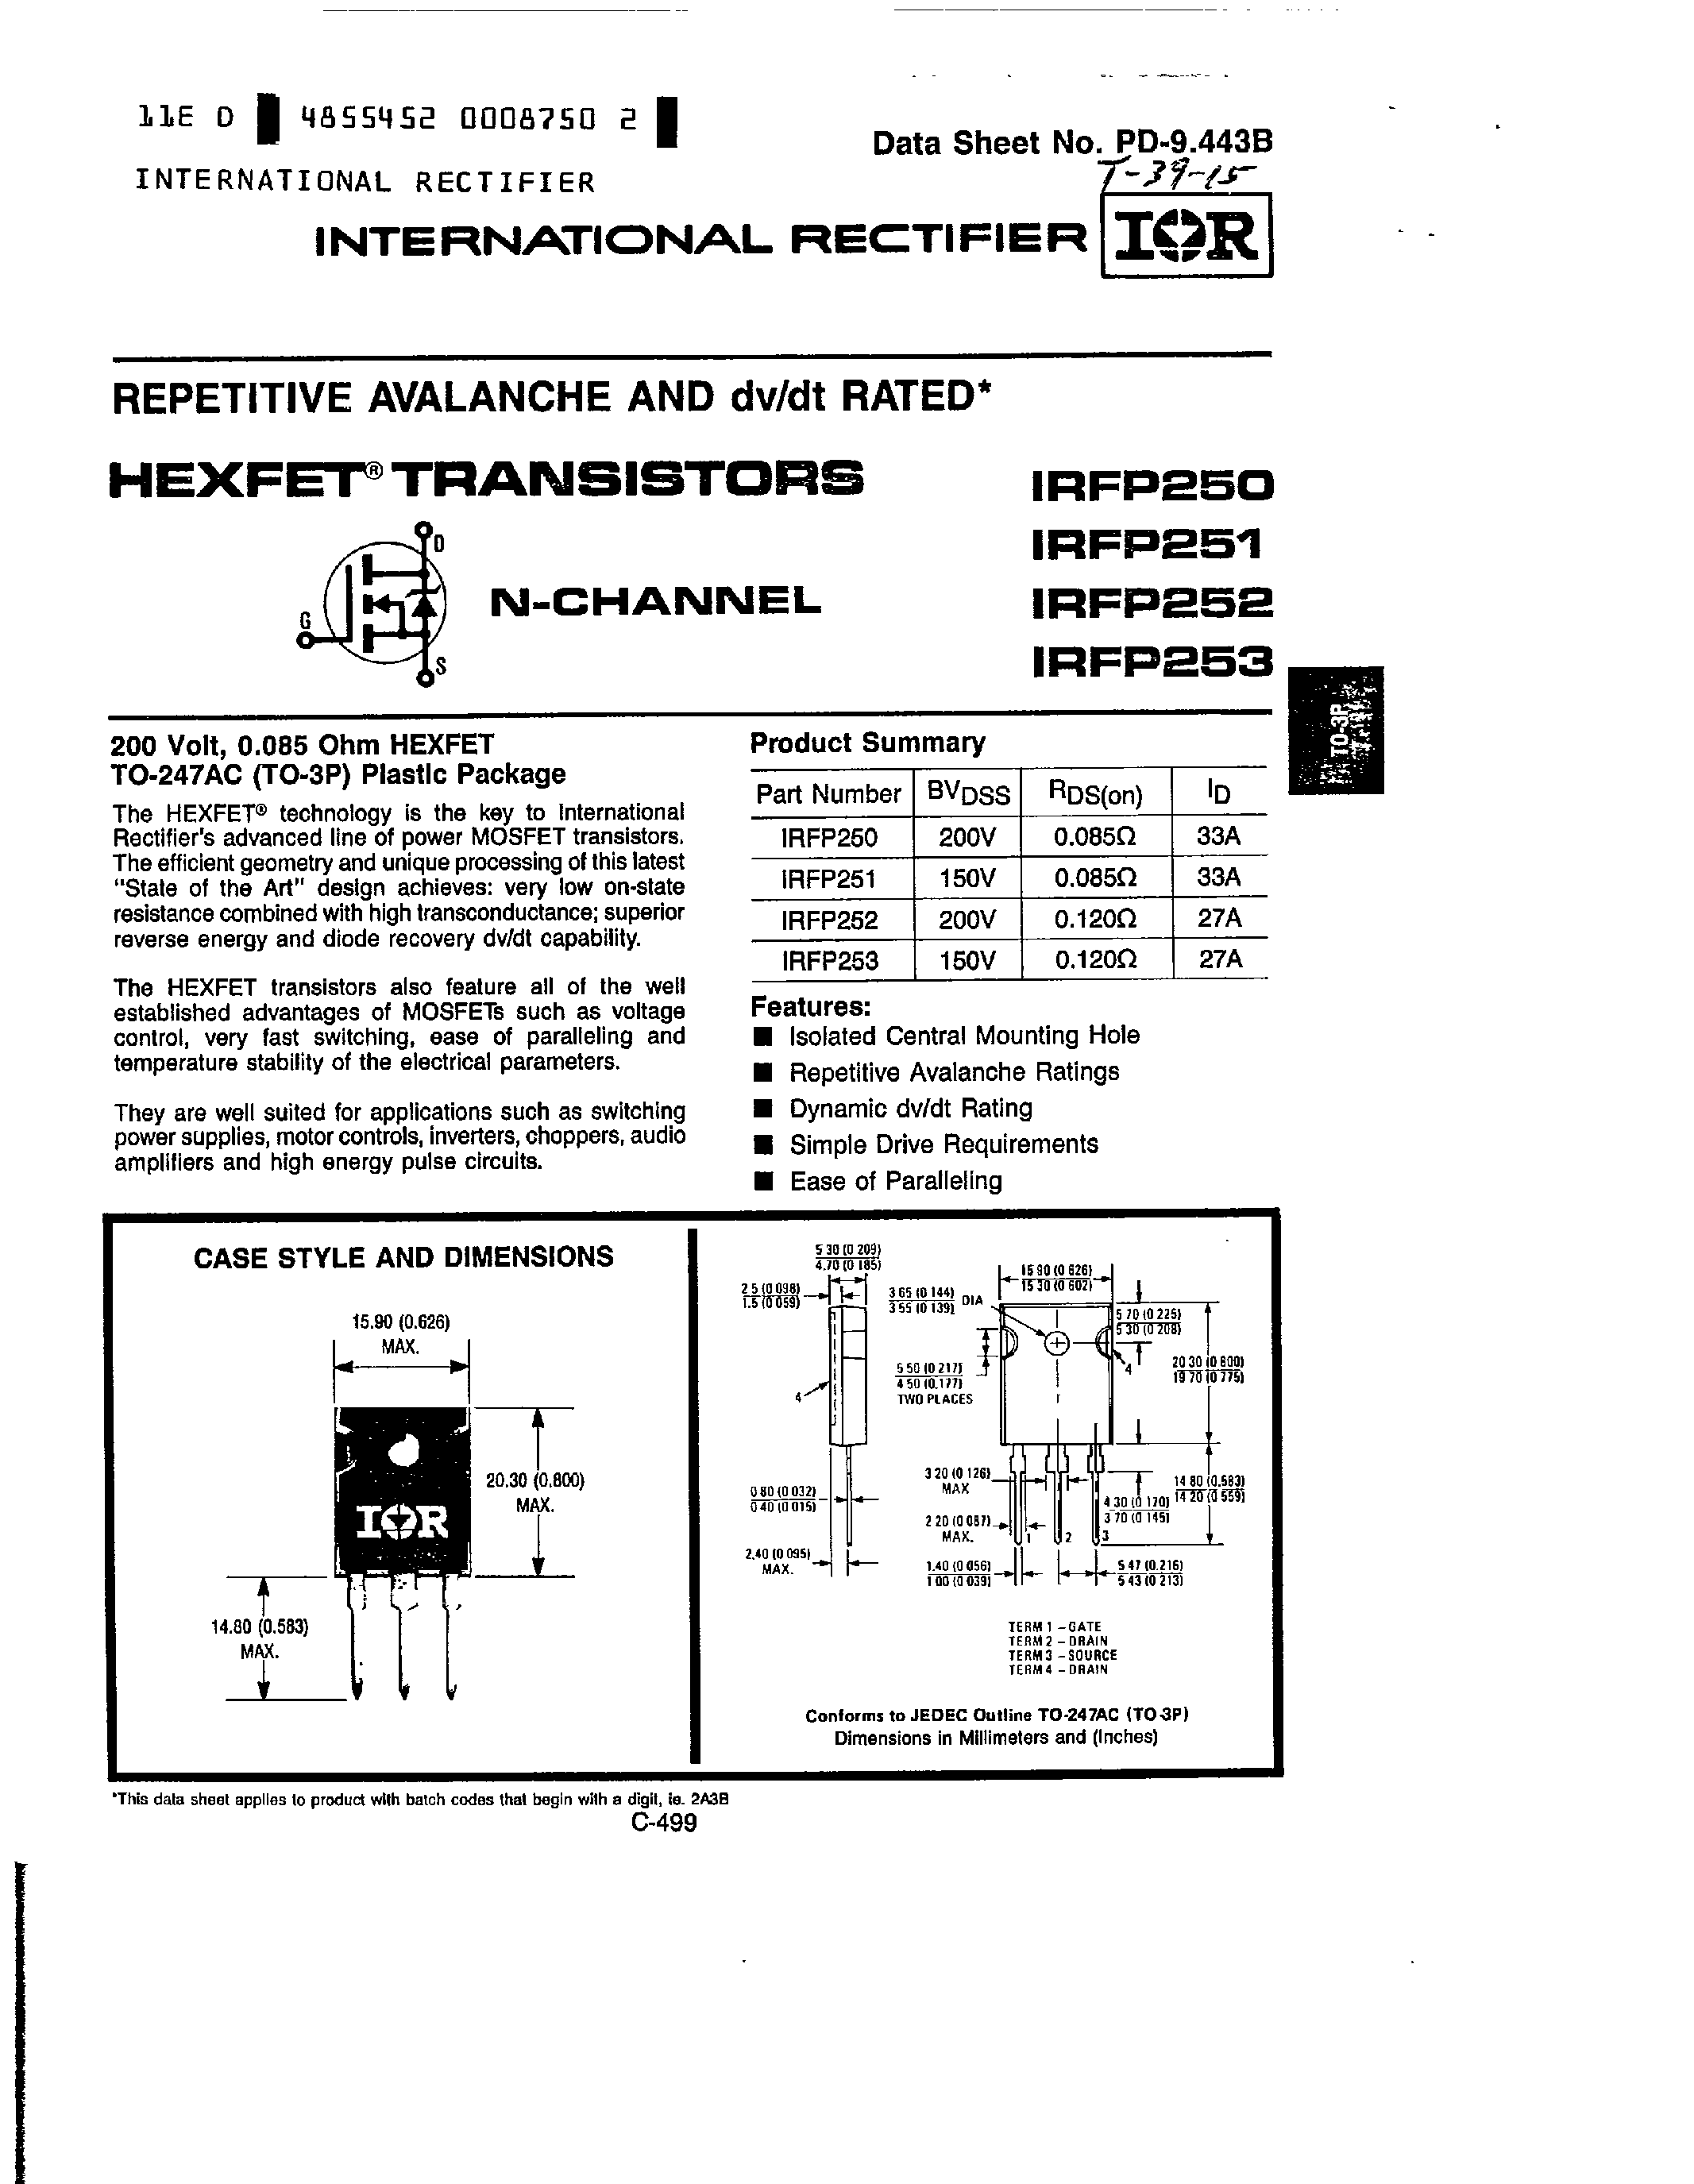 Datasheet IRFP251 - (IRFP252 / IRFP253) N-Channel(Hexfet Transistors) page 1